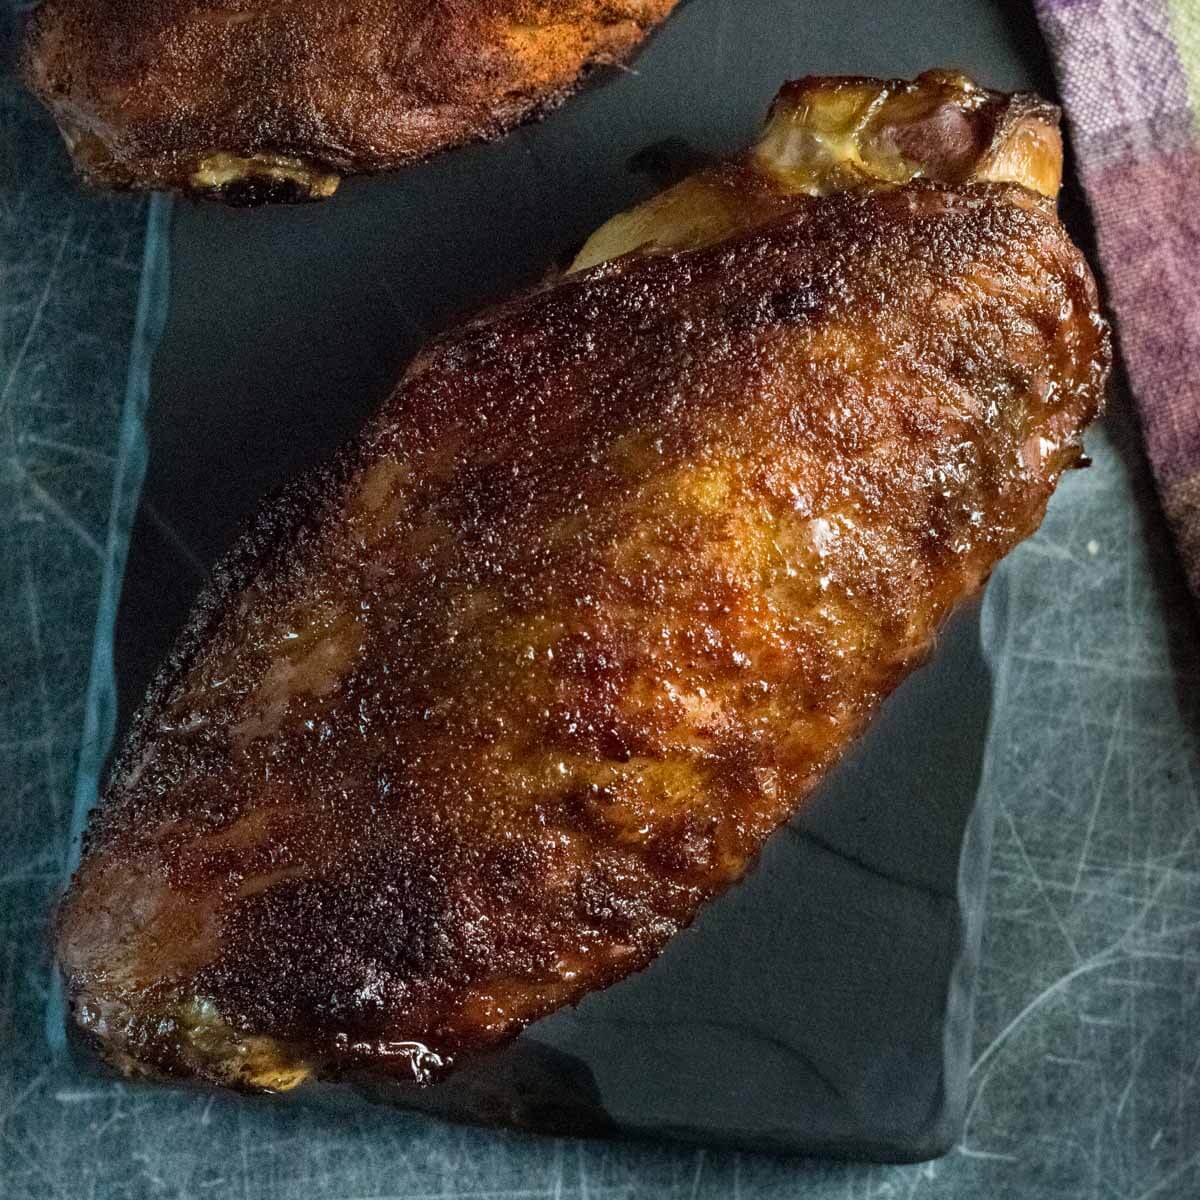 https://www.foxvalleyfoodie.com/wp-content/uploads/2021/05/smoked-turkey-wings-recipe.jpg